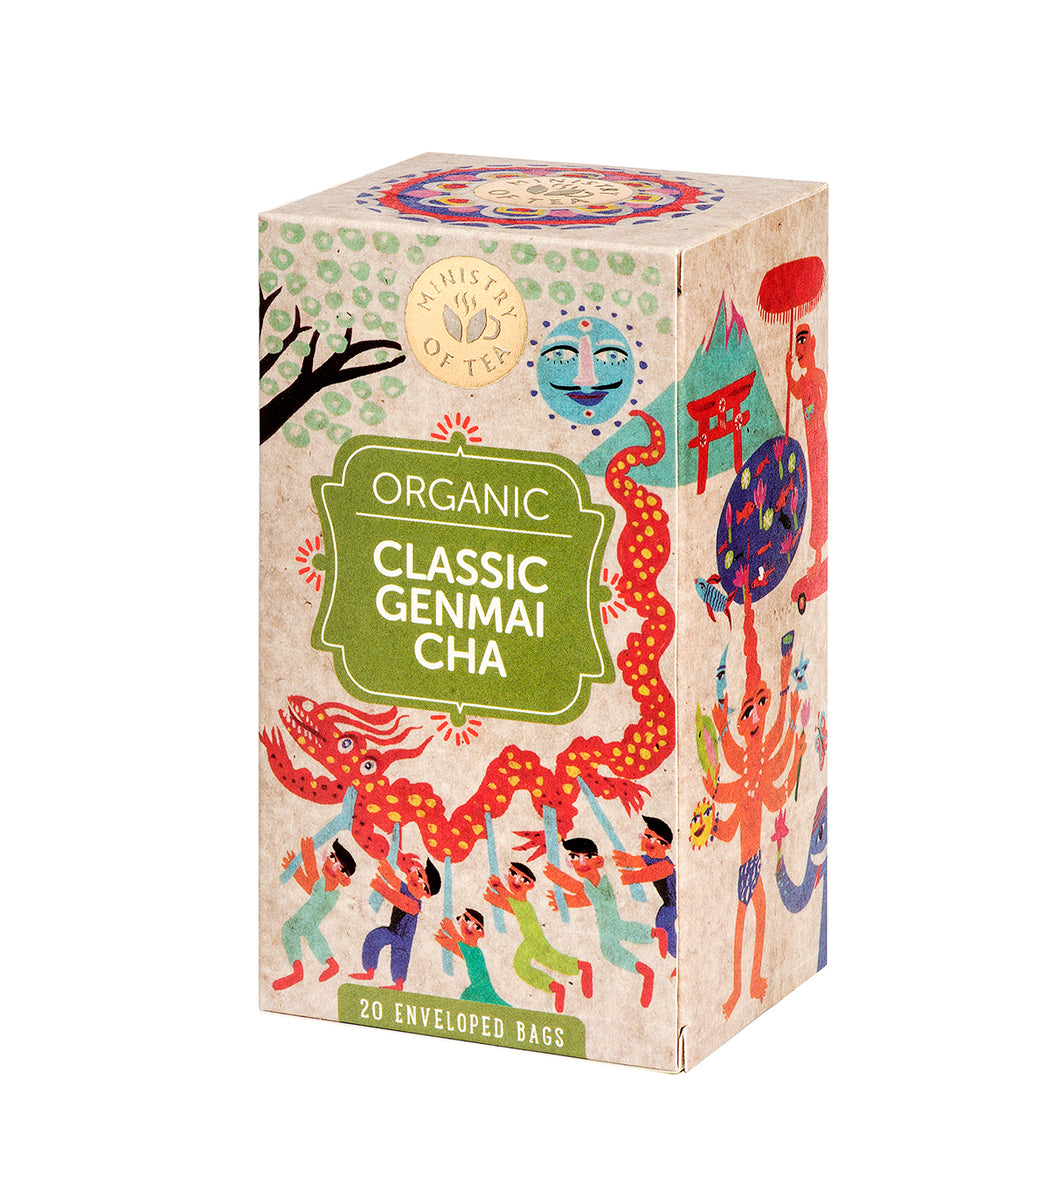 Organic Classic Genmai Cha